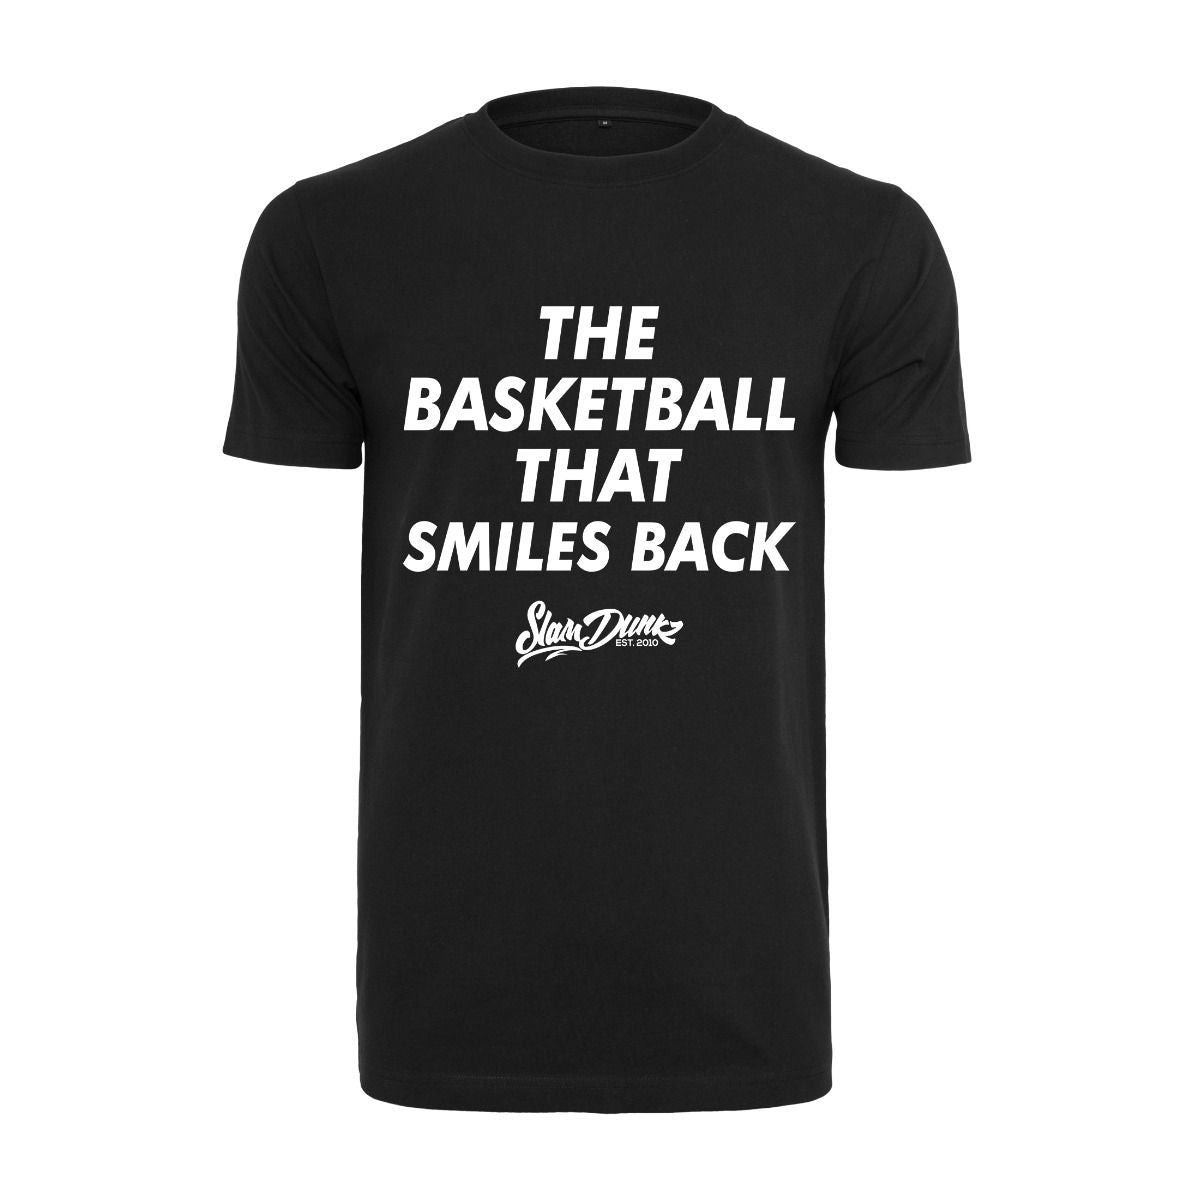 Slamdunkz - The Basketball That Smiles Back